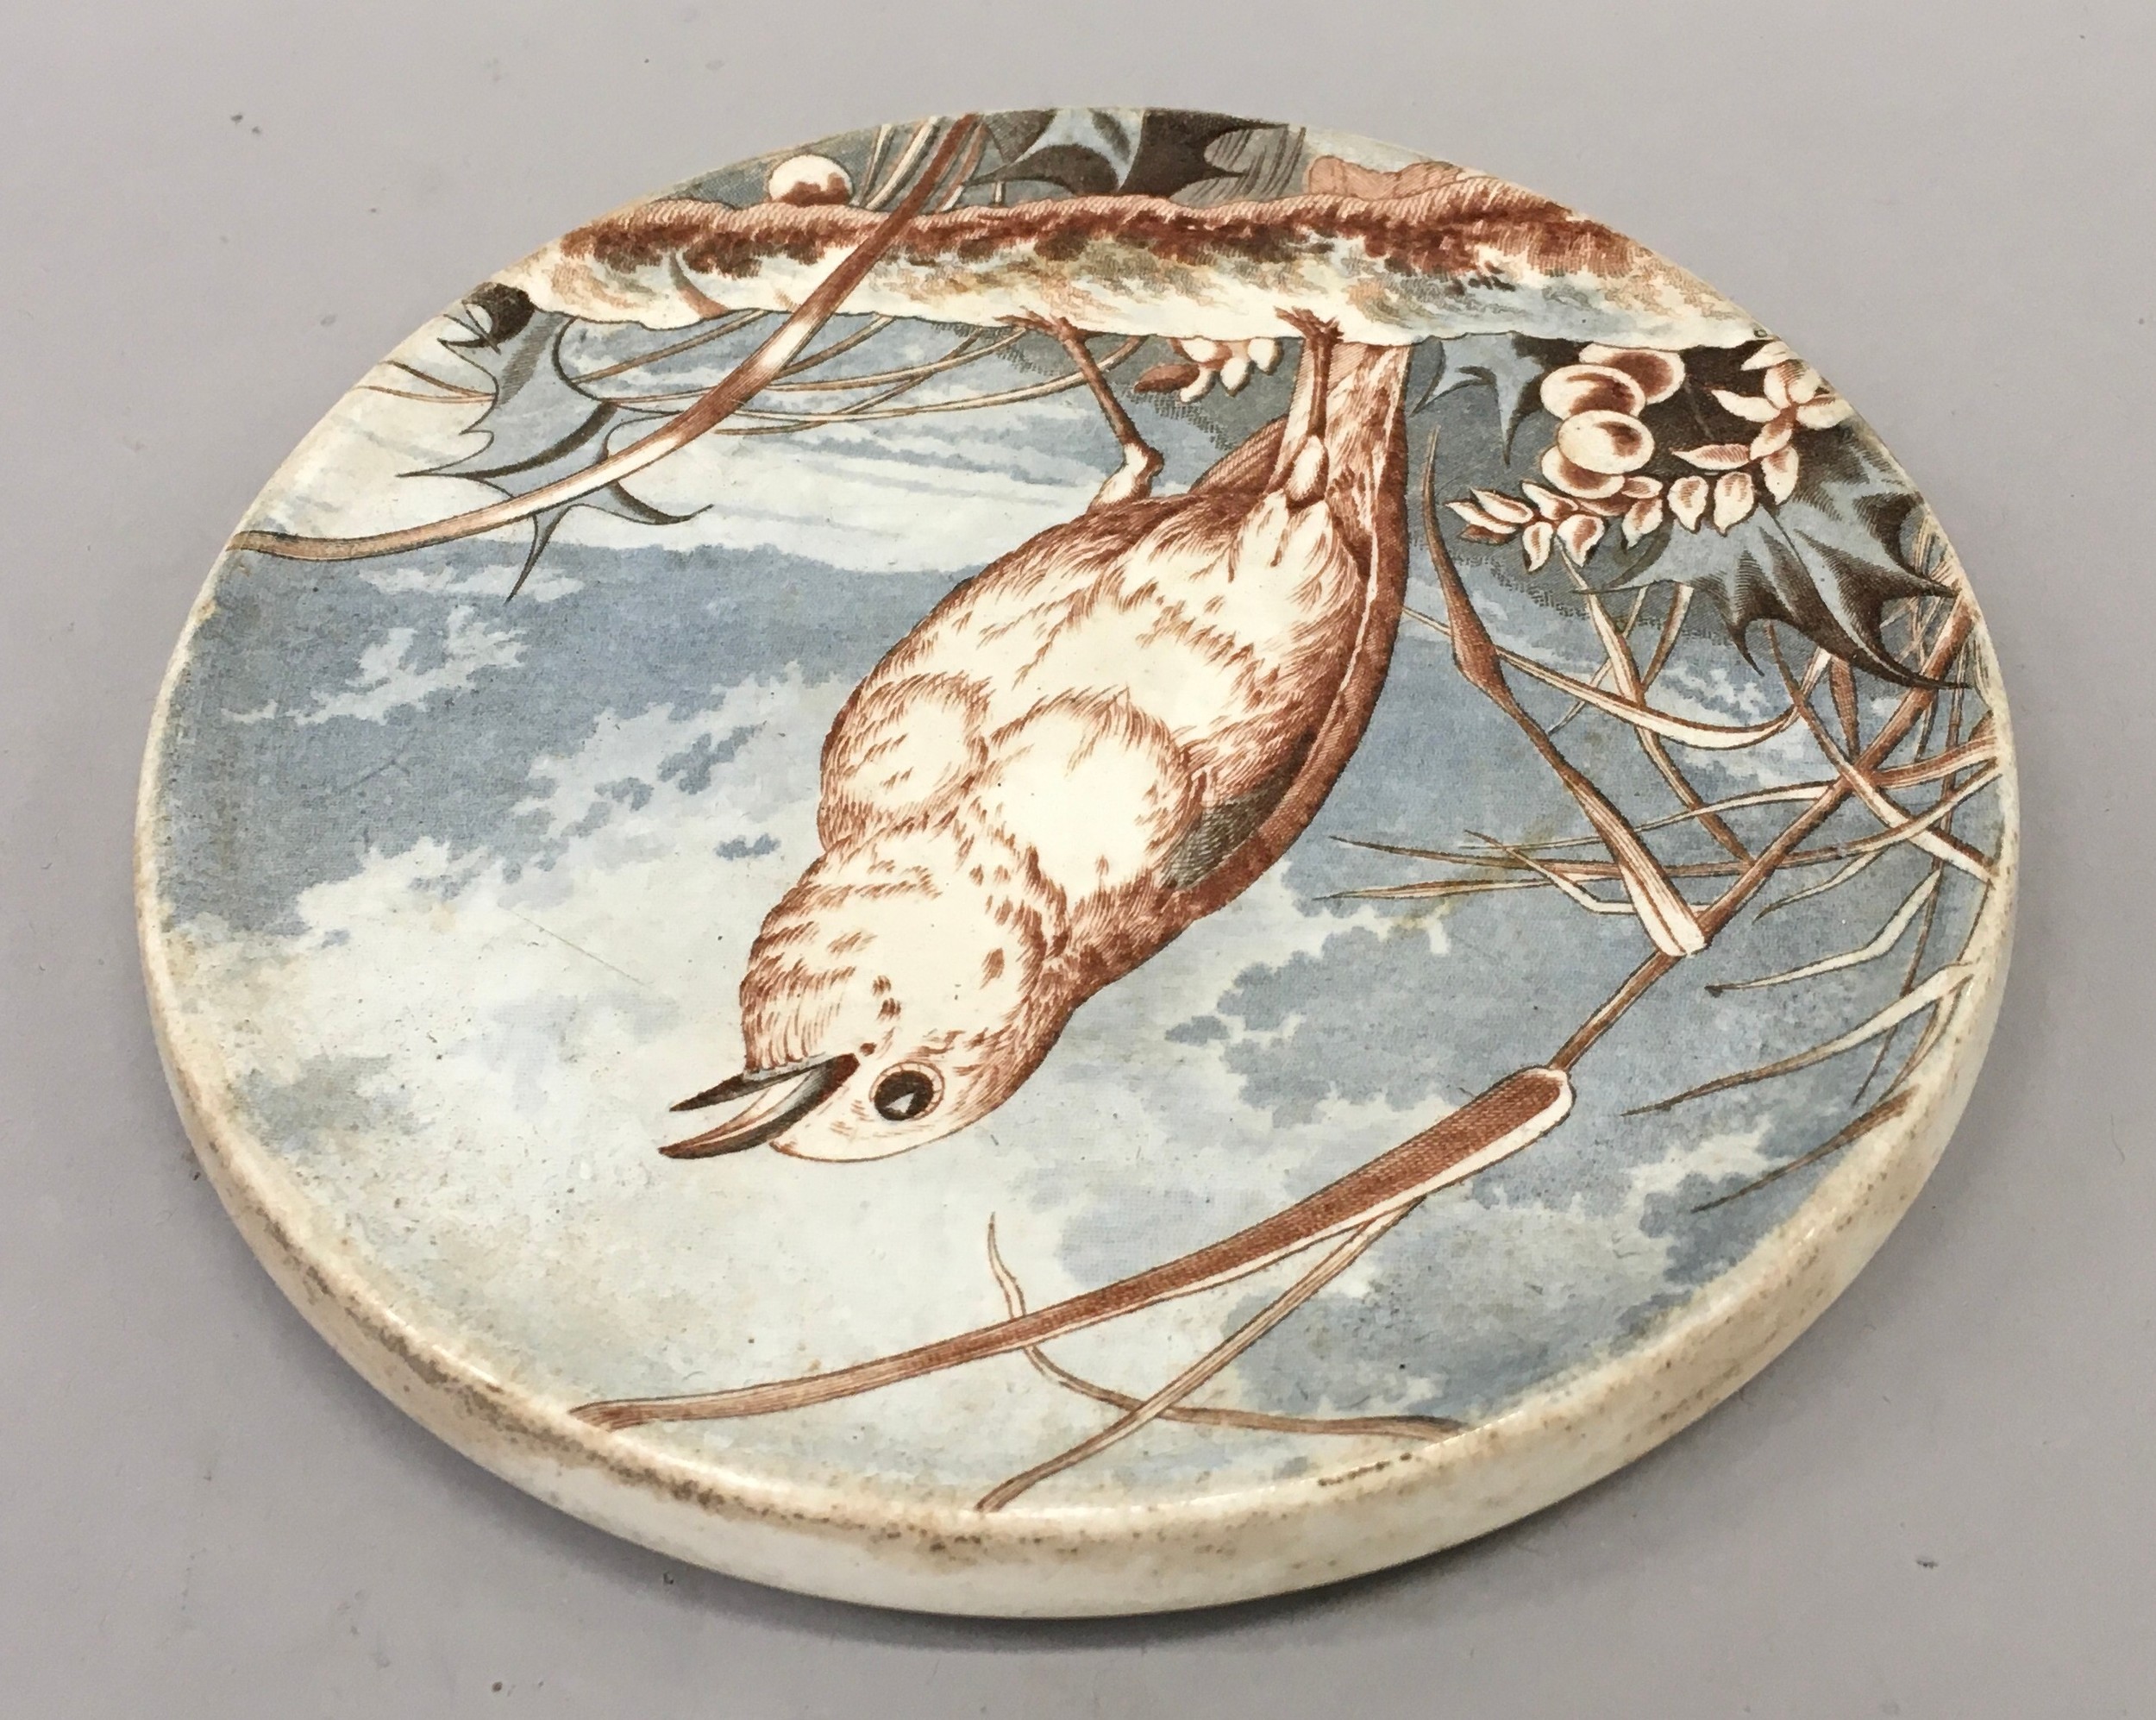 W.T.Copeland and sons circular trivet depicting a bird C1880 15cm diameter - Image 2 of 3